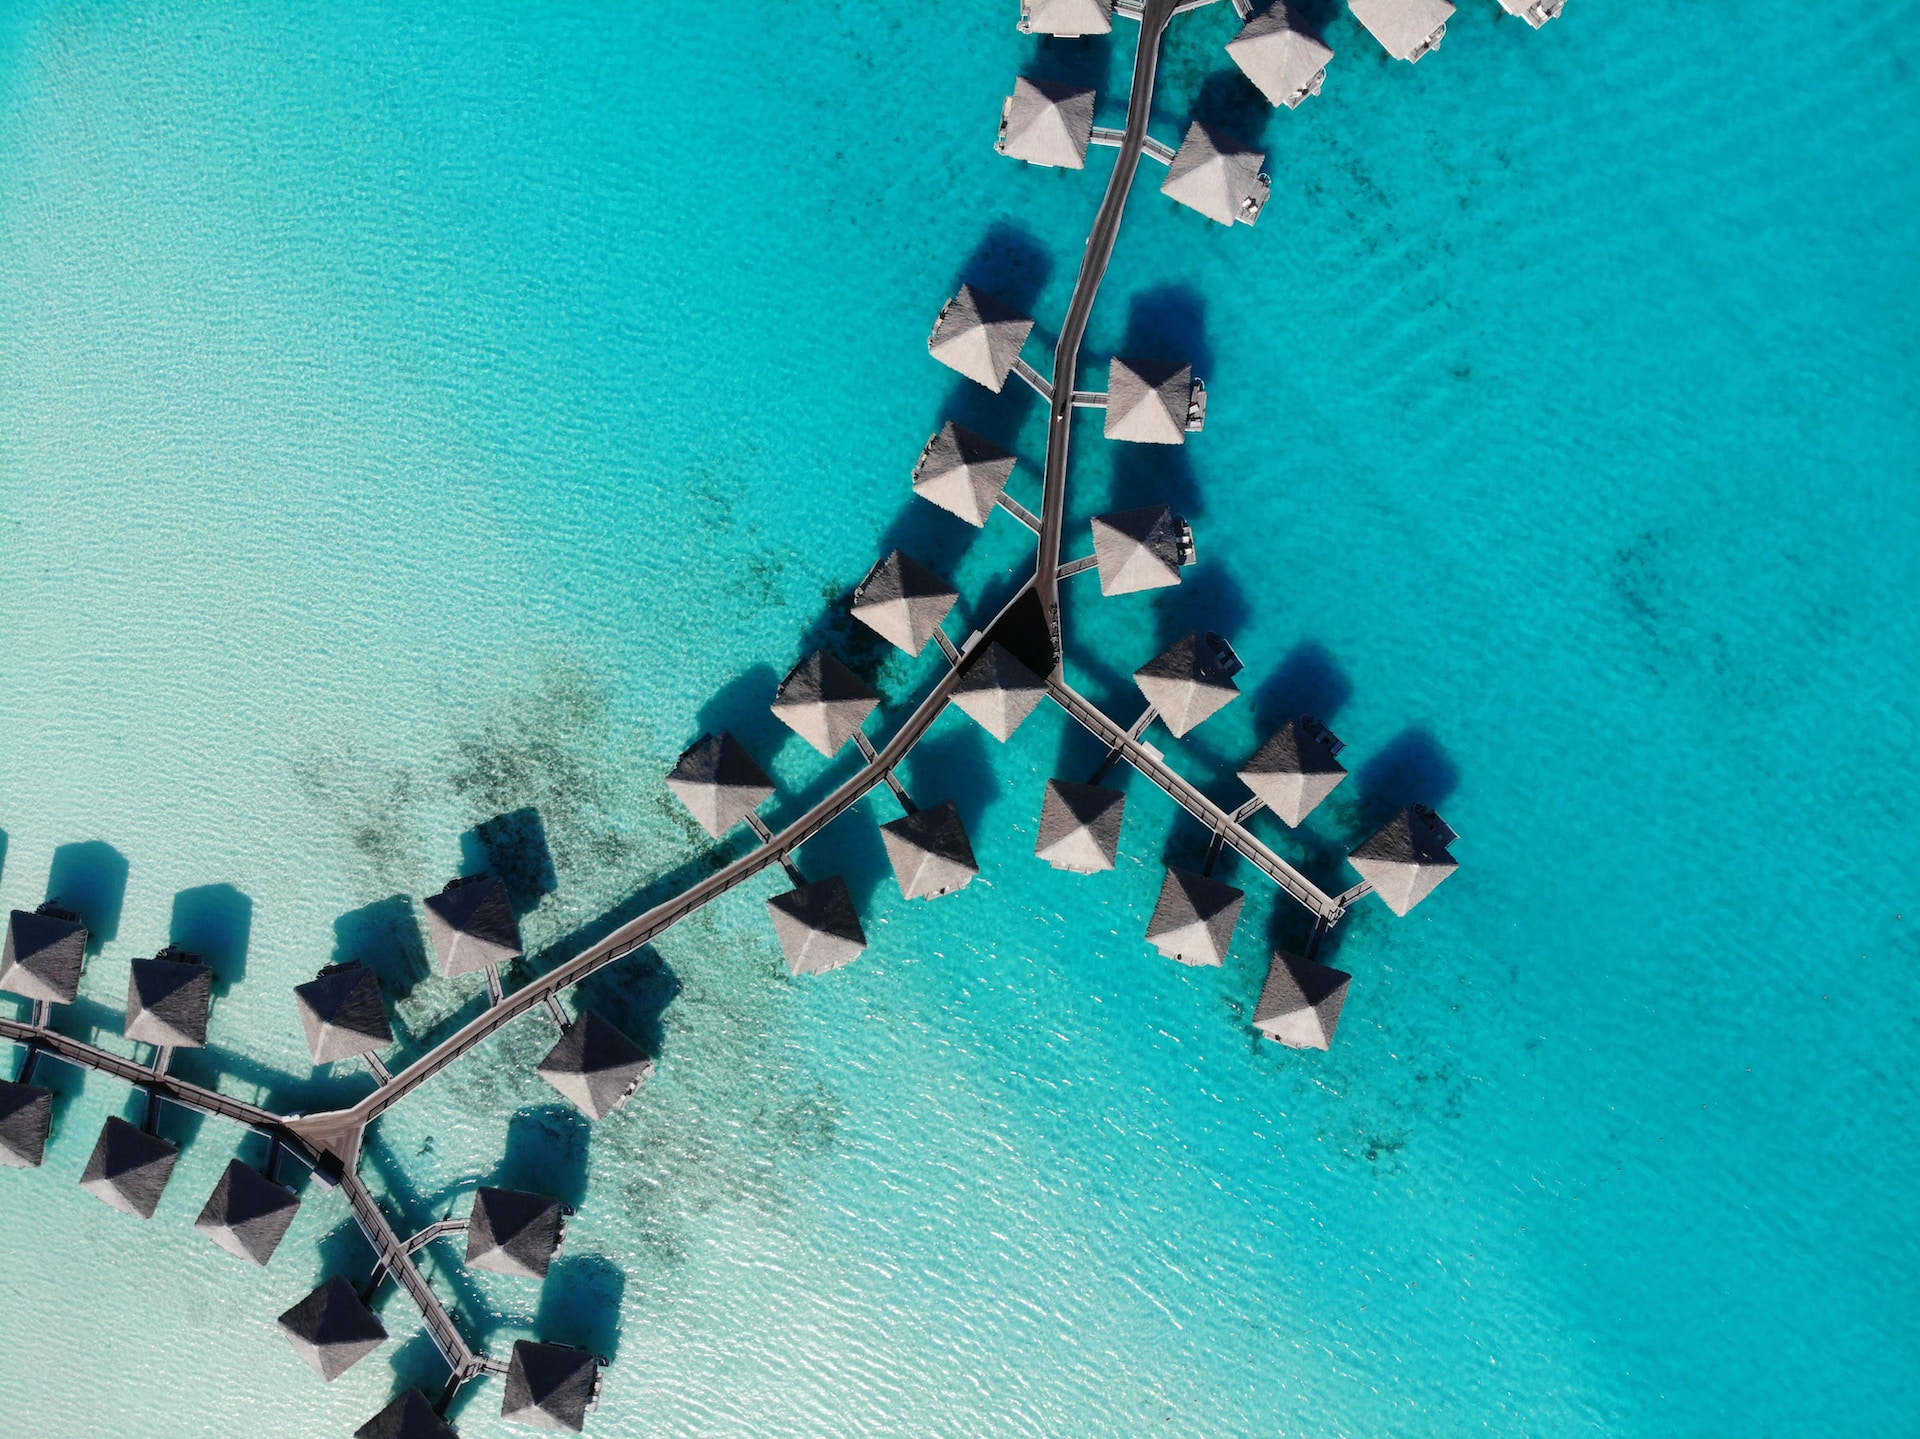 Bungalows in Bora Bora, a favorite island escape for luxury travelers (photo: Thomas Stadler)